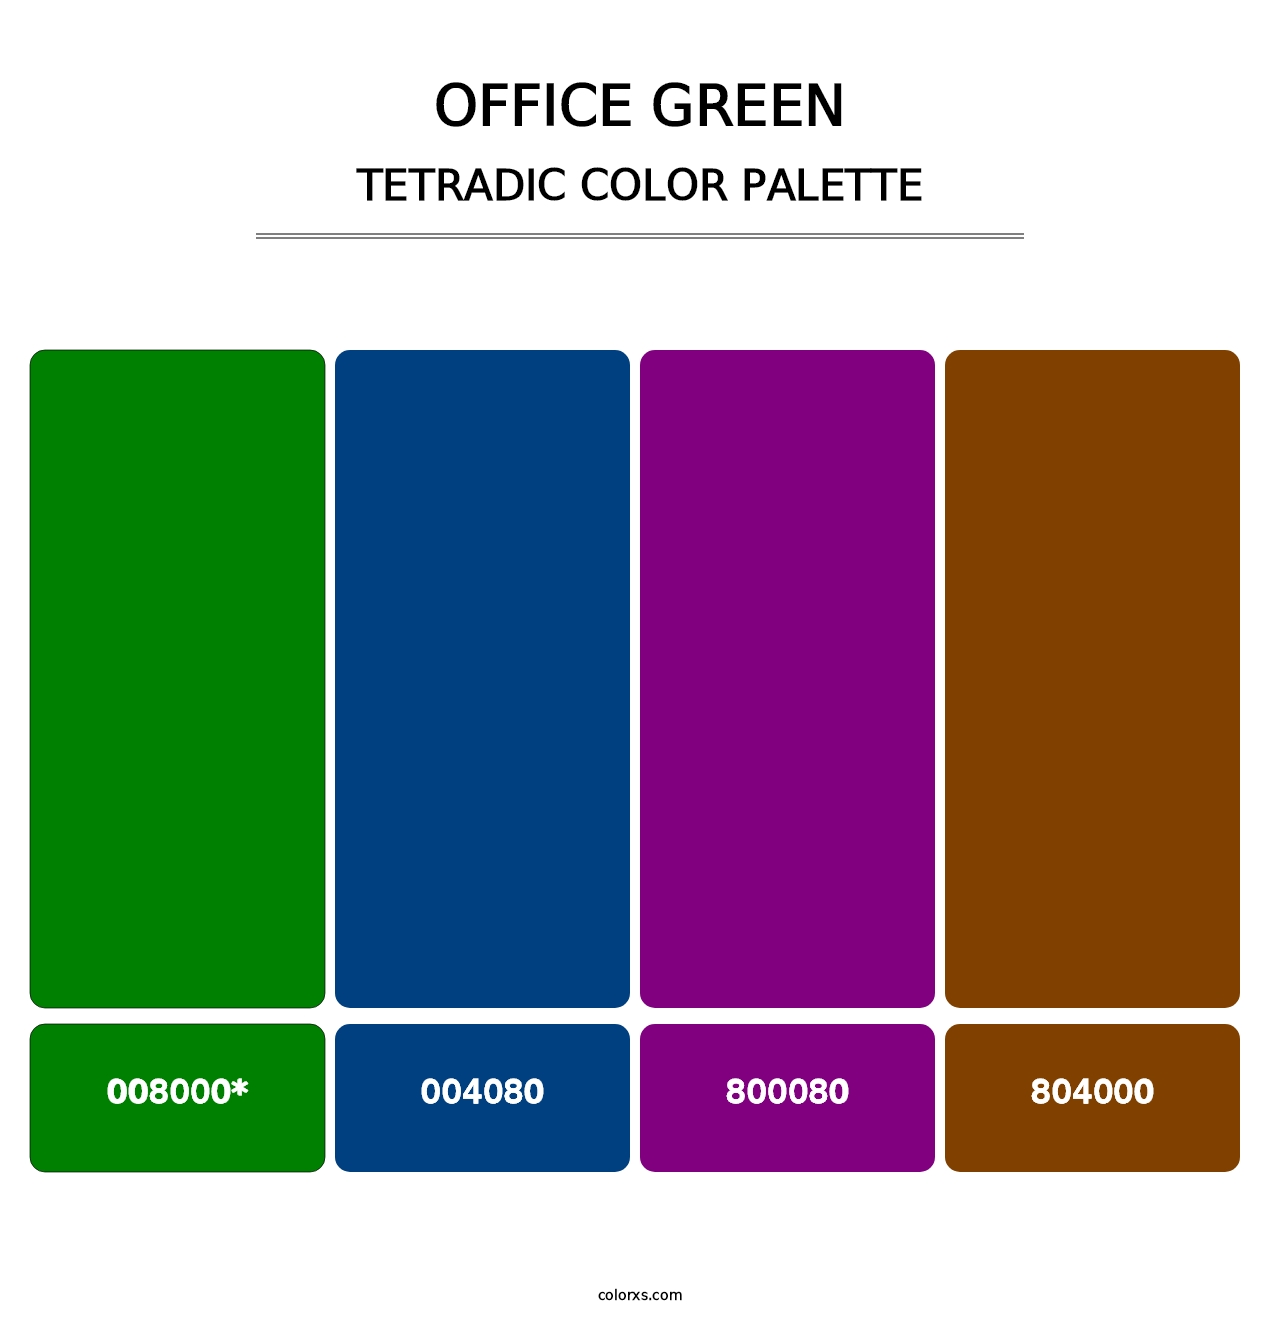 Office Green - Tetradic Color Palette